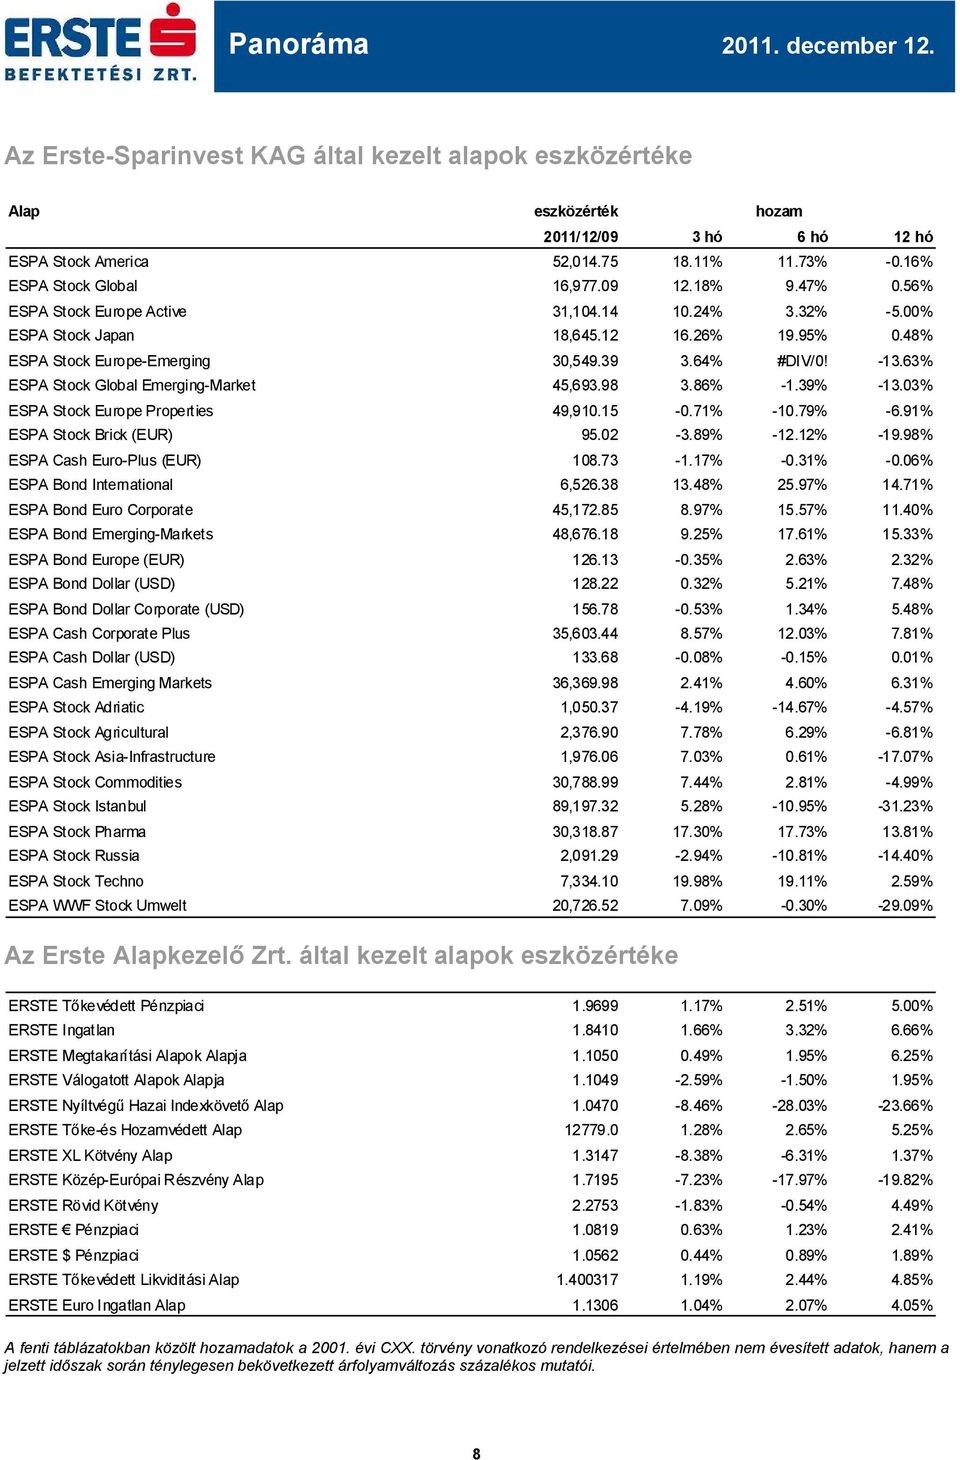 63% ESPA Stock Global Emerging-Market 45,693.98 3.86% -1.39% -13.3% ESPA Stock Europe Properties 49,91.15 -.71% -1.79% -6.91% ESPA Stock Brick (EUR) 95.2-3.89% -12.12% -19.